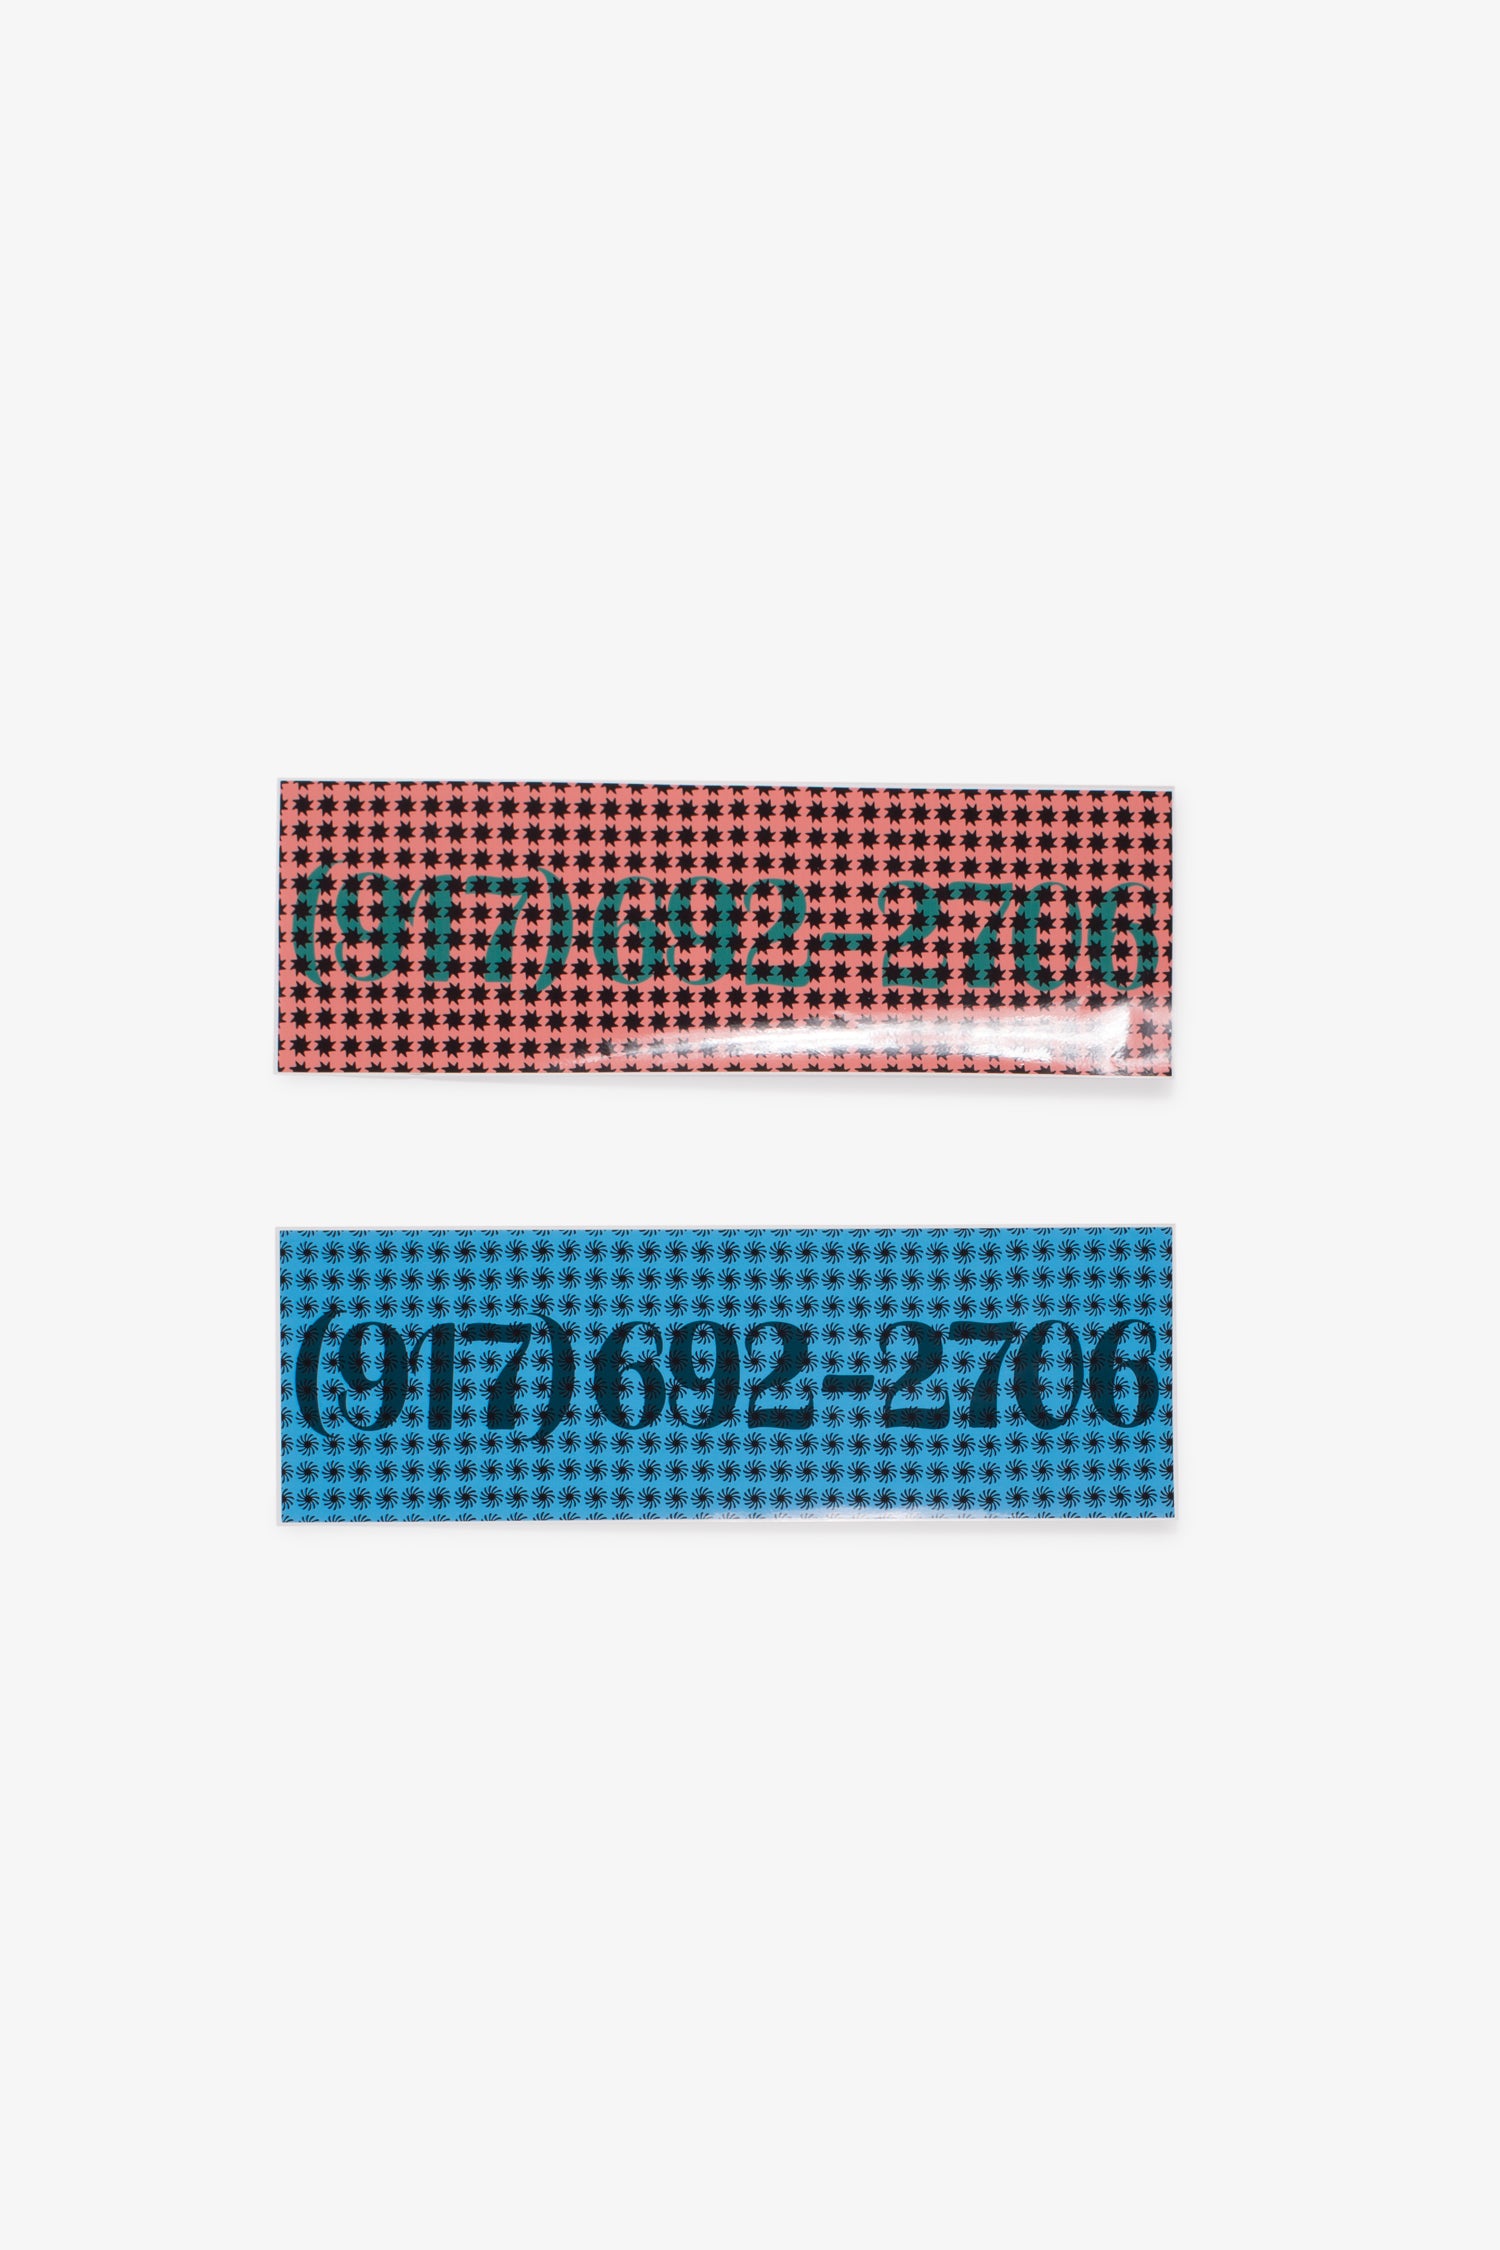 Selectshop FRAME - CALL ME 917 Dialtone Long Sticker Accessories Dubai